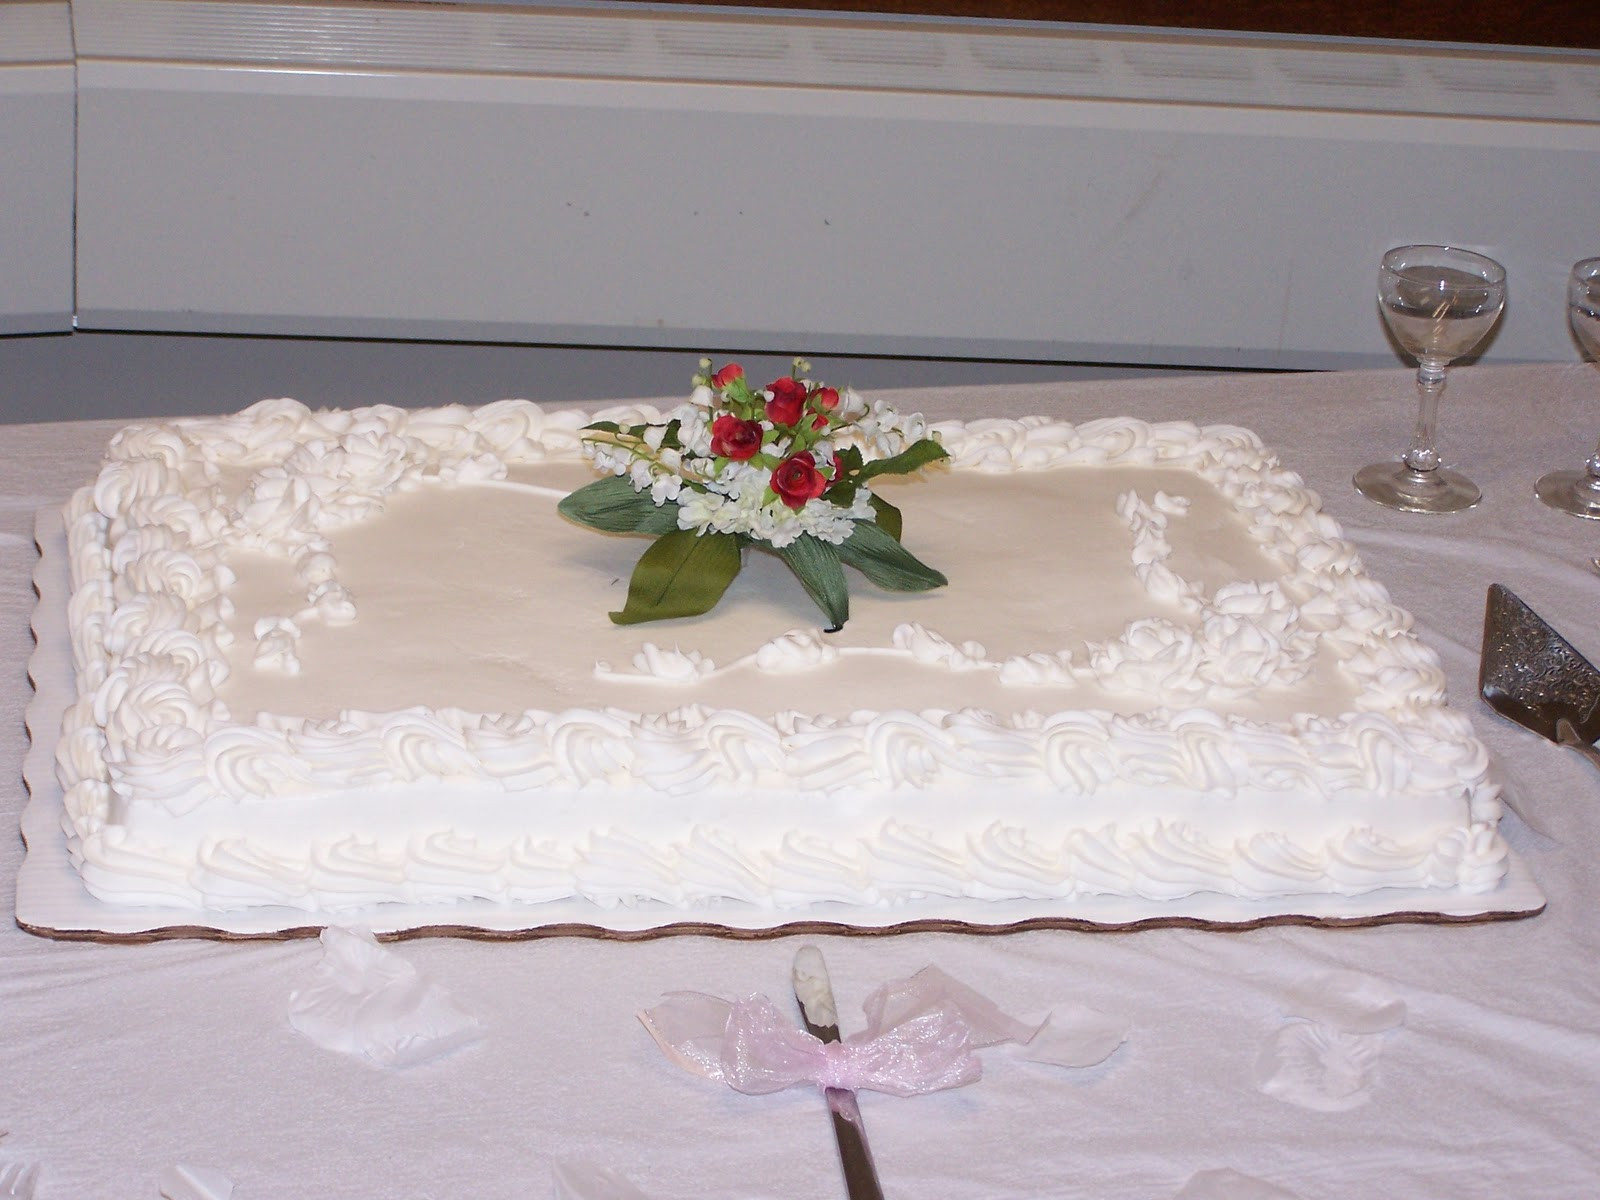 Wedding Cakes At Sams Club
 sam s club wedding cakes